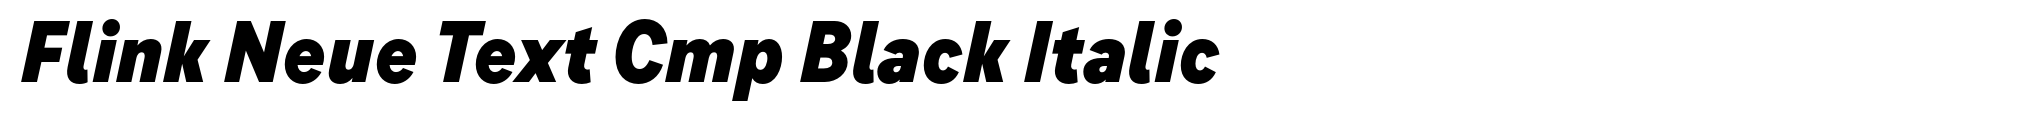 Flink Neue Text Cmp Black Italic image